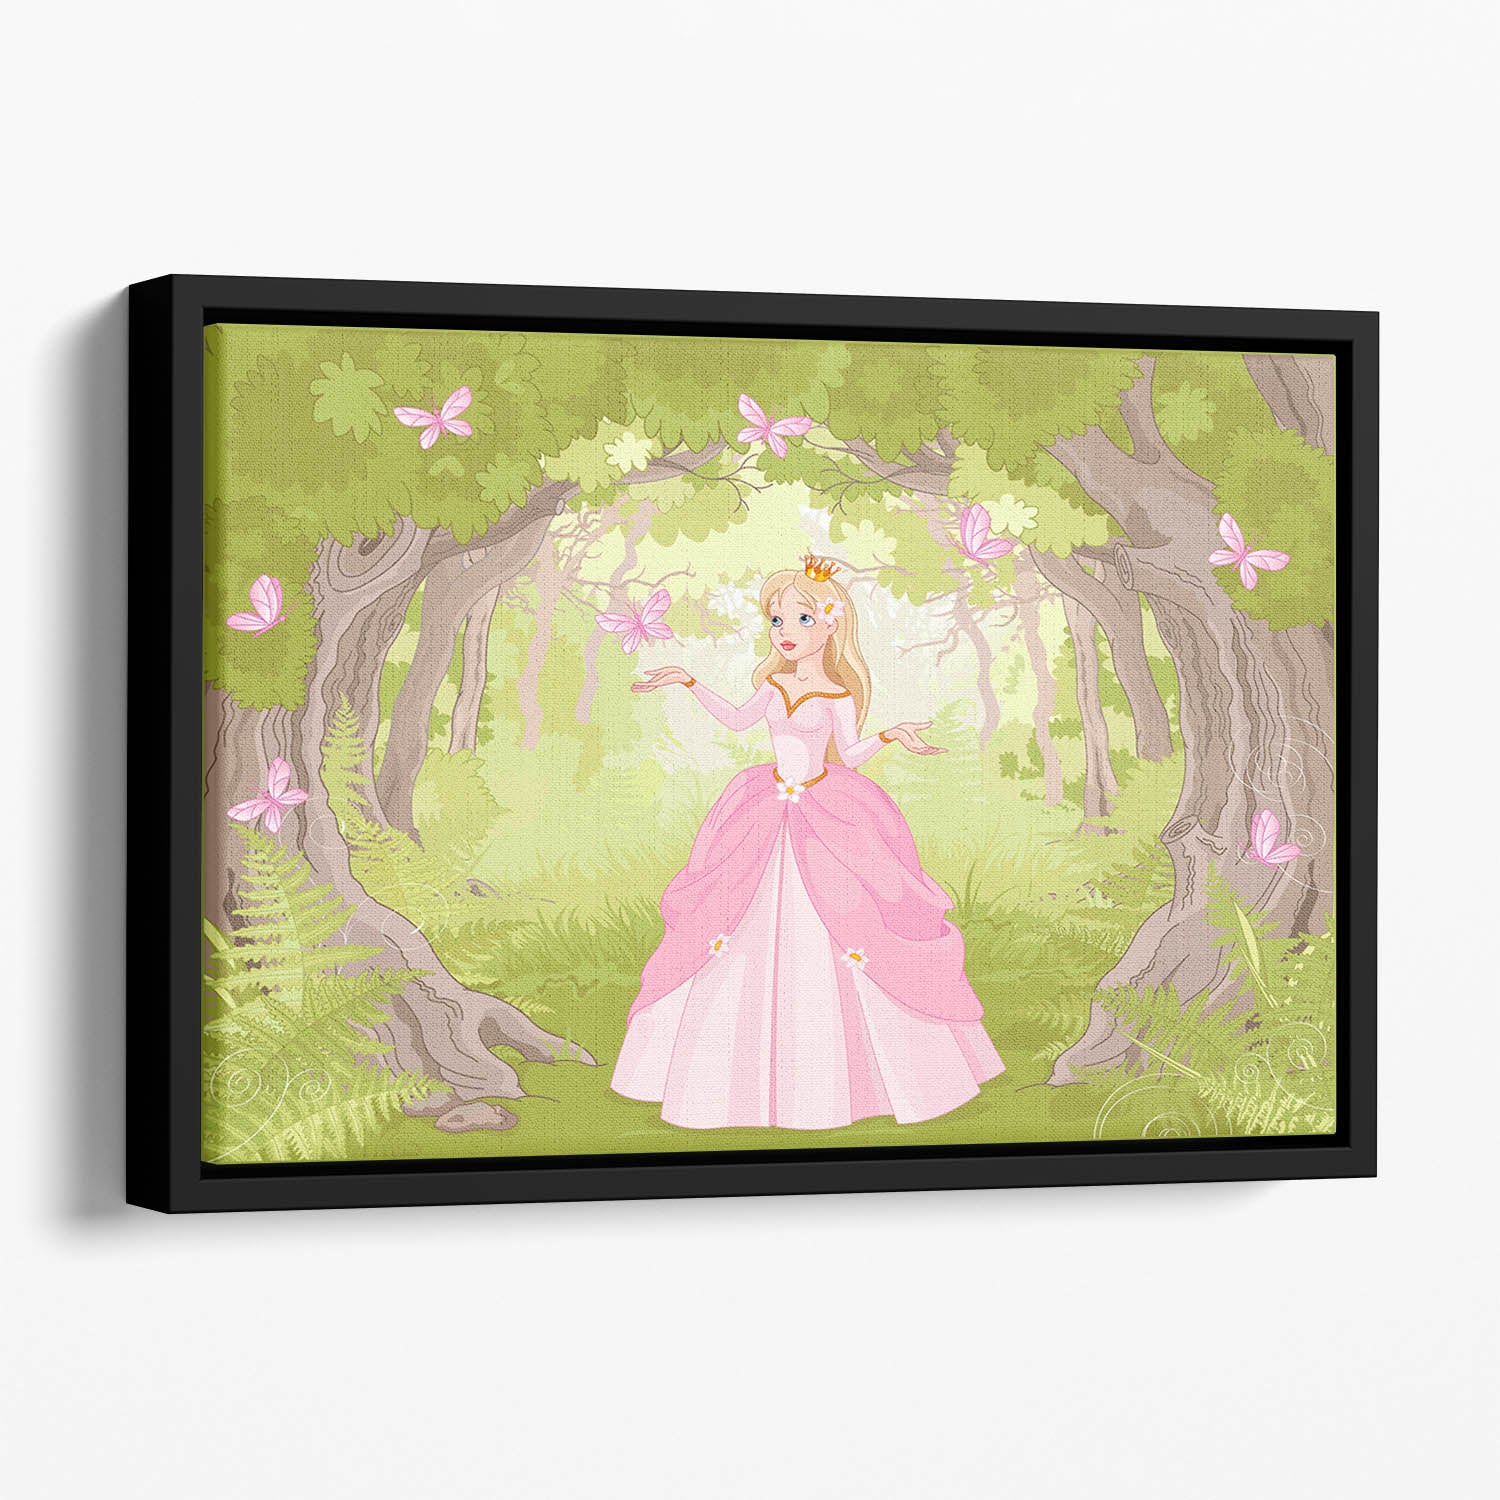 Charming princess a fantastic wood Floating Framed Canvas